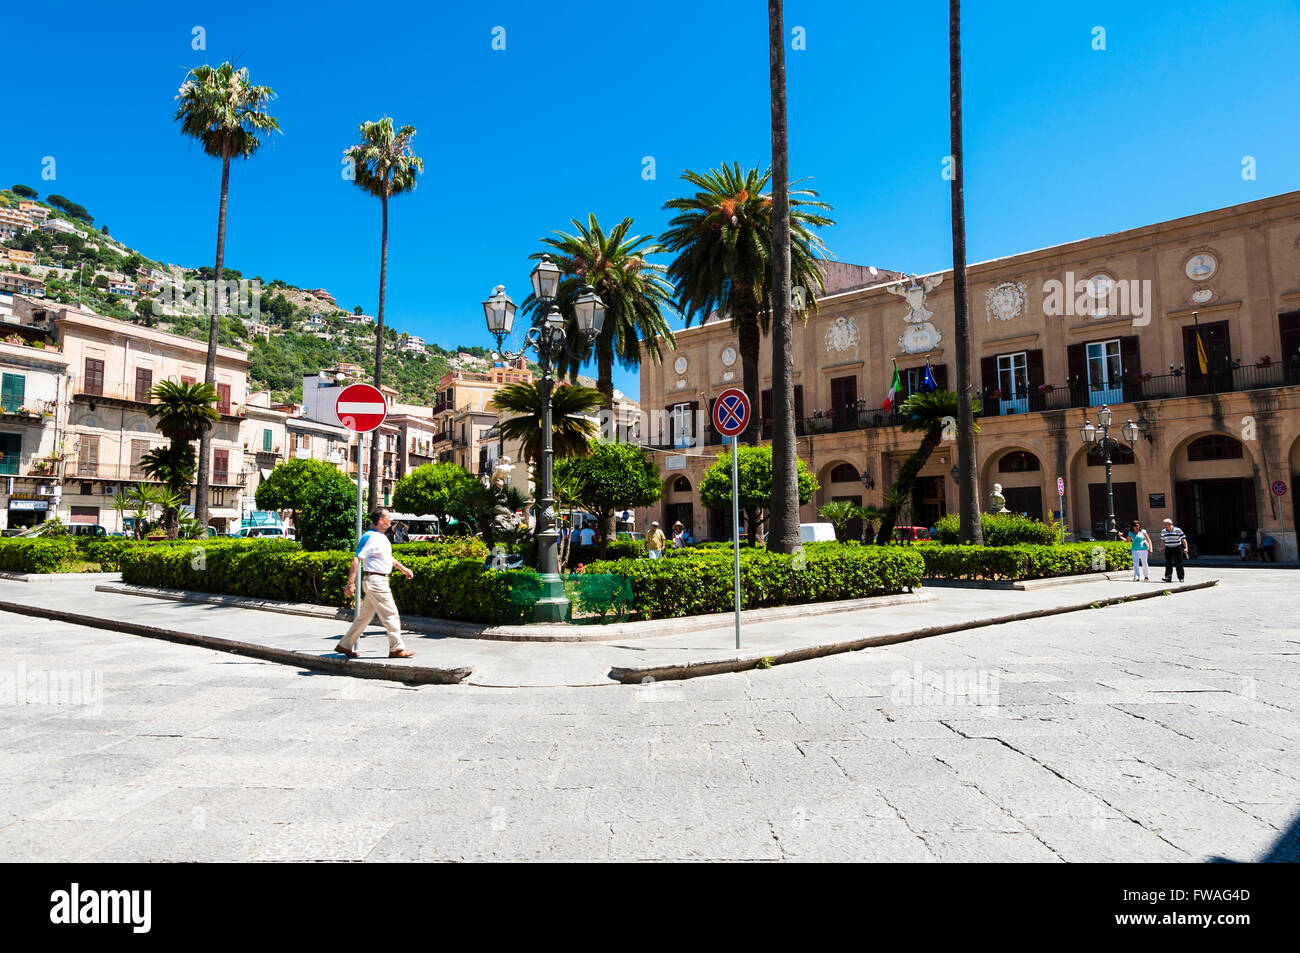 Piazza Vittorio Emanuele. Monreale, Palermo, Sicily, Italy. Stock Photo